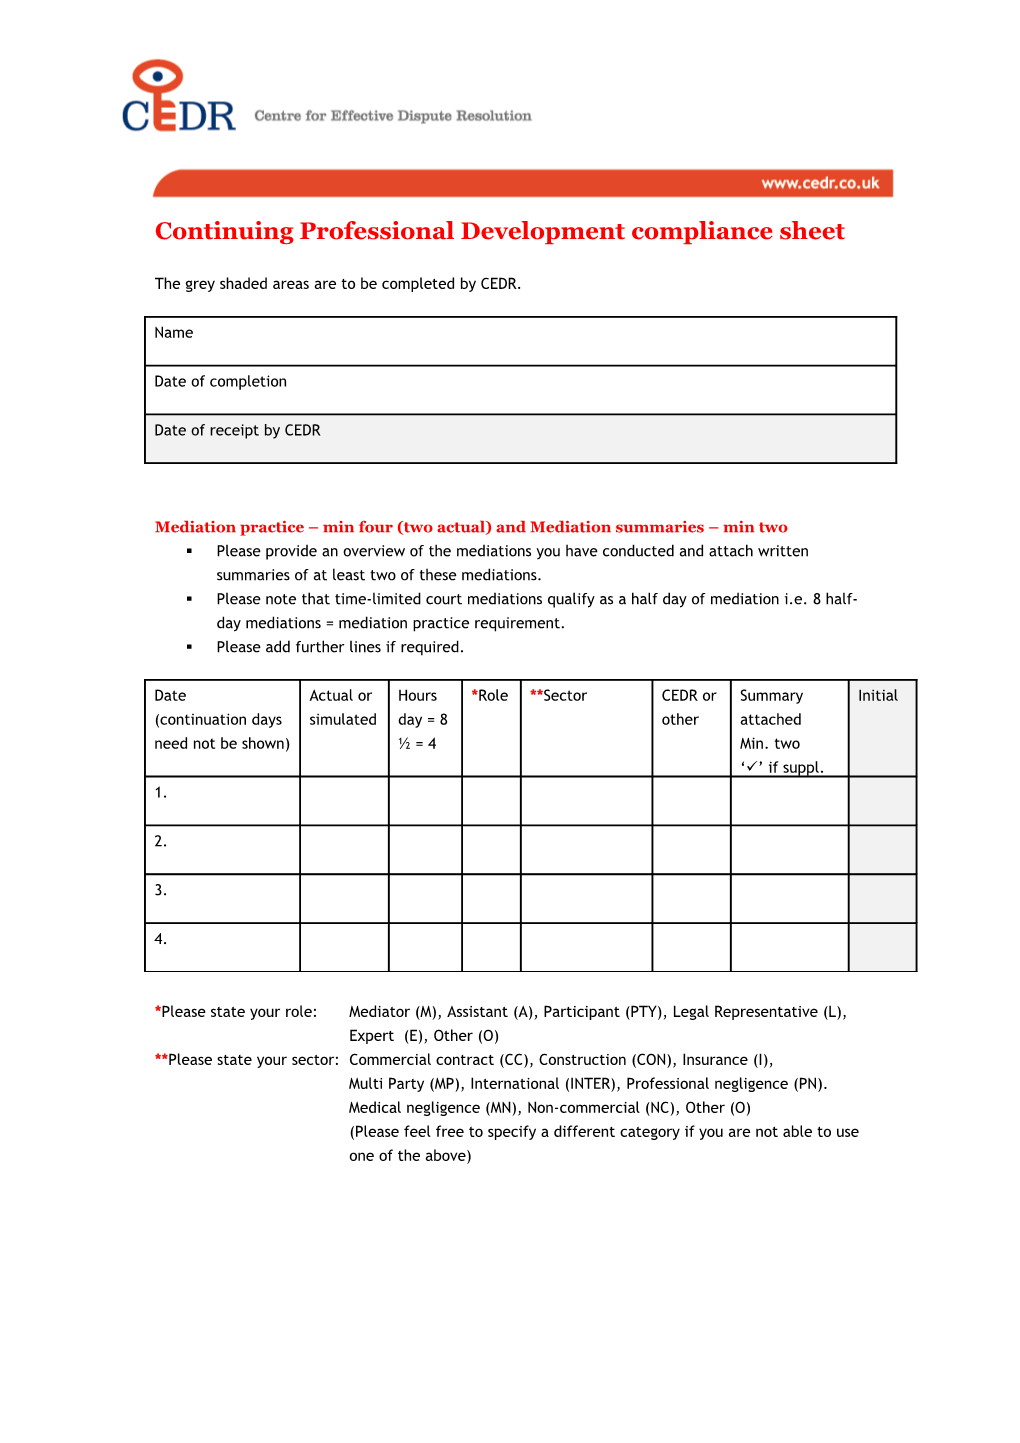 Continuing Professional Development Compliance Sheet